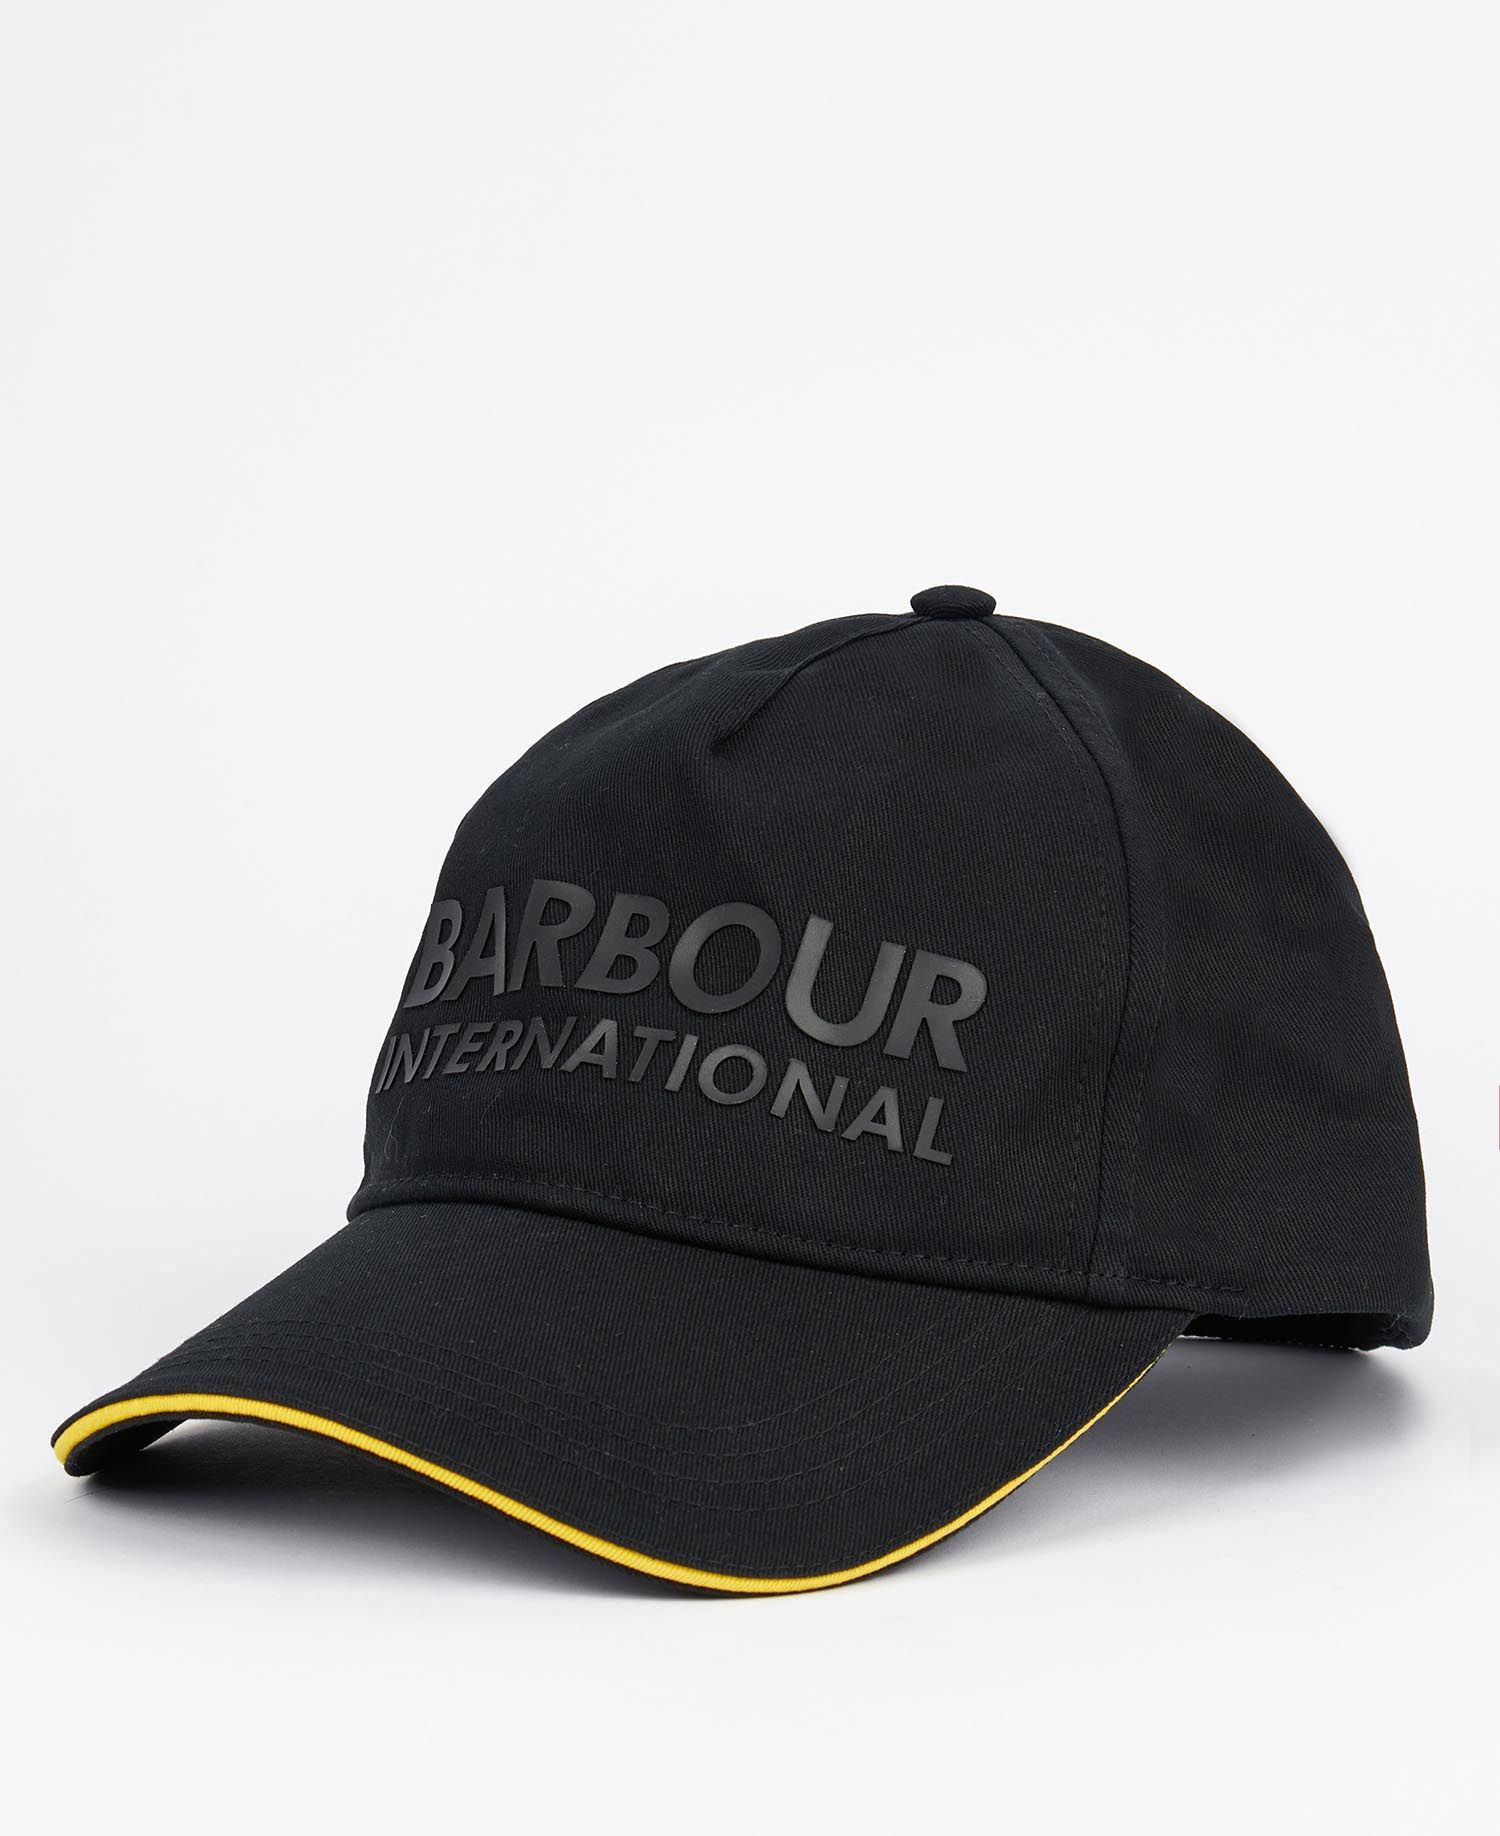 Barbour International Amphere Sports Cap Black